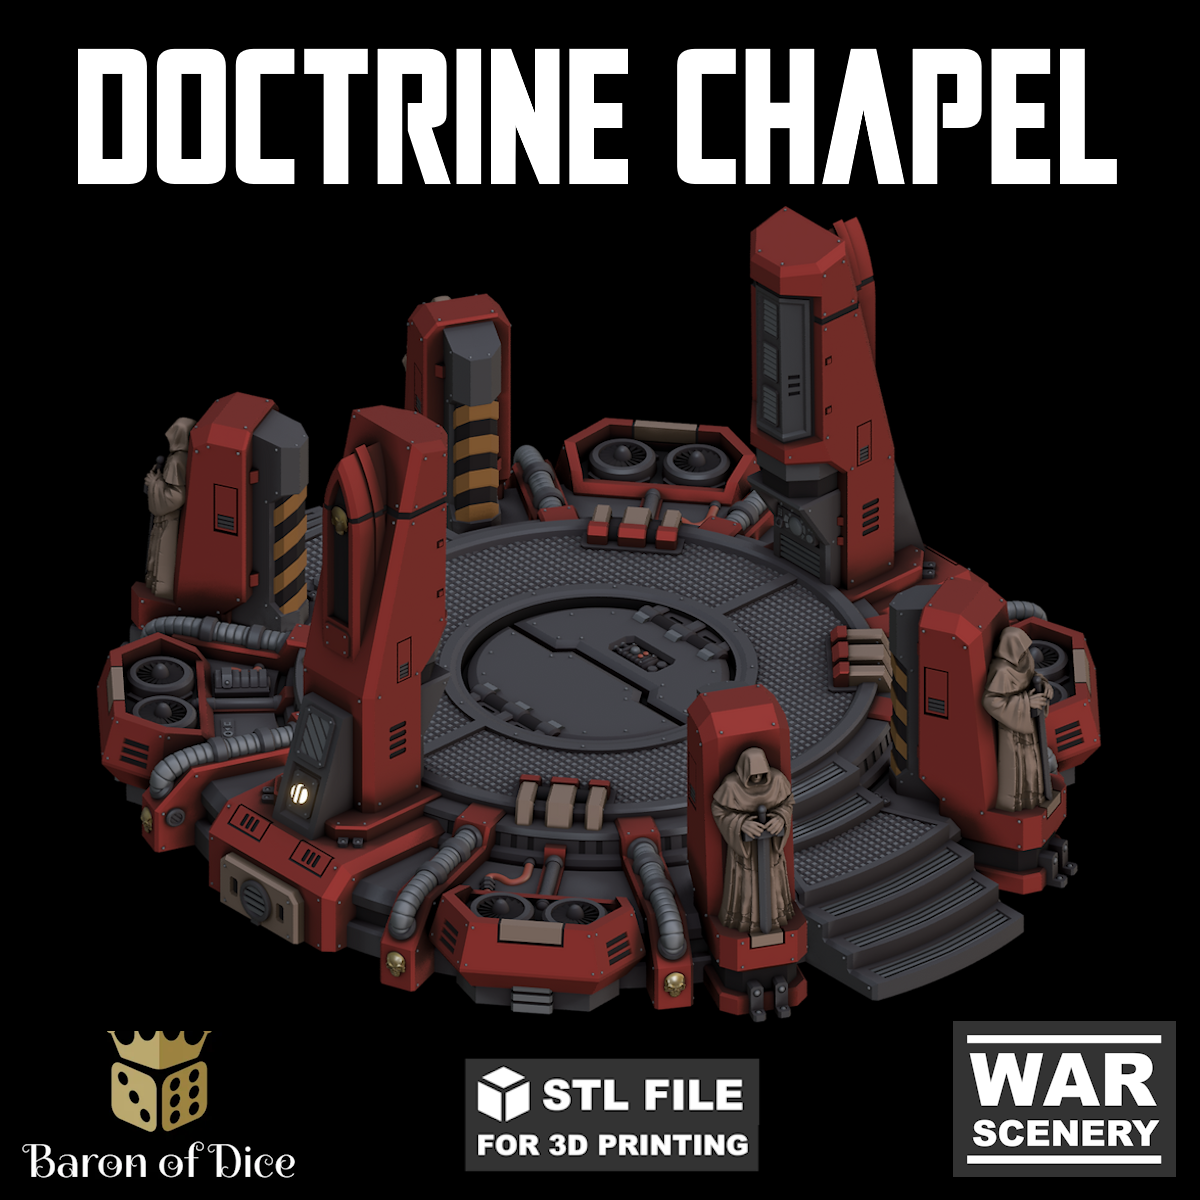 Chapter Doctrine Chapel, STL File